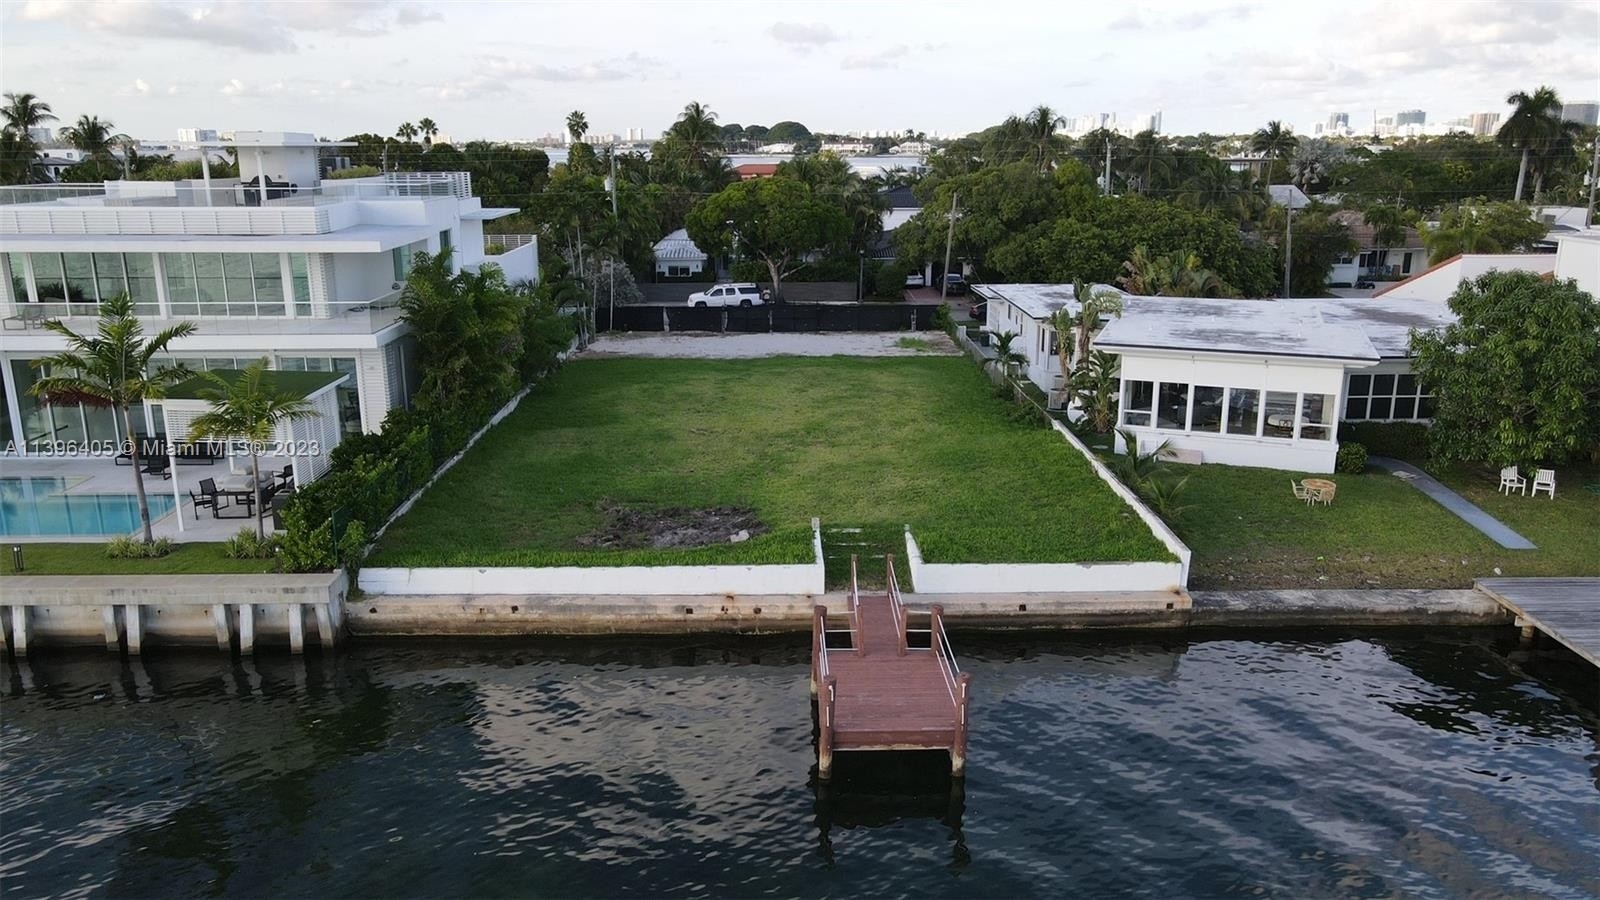 Property at Biscayne Point, Miami Beach, FL 33141